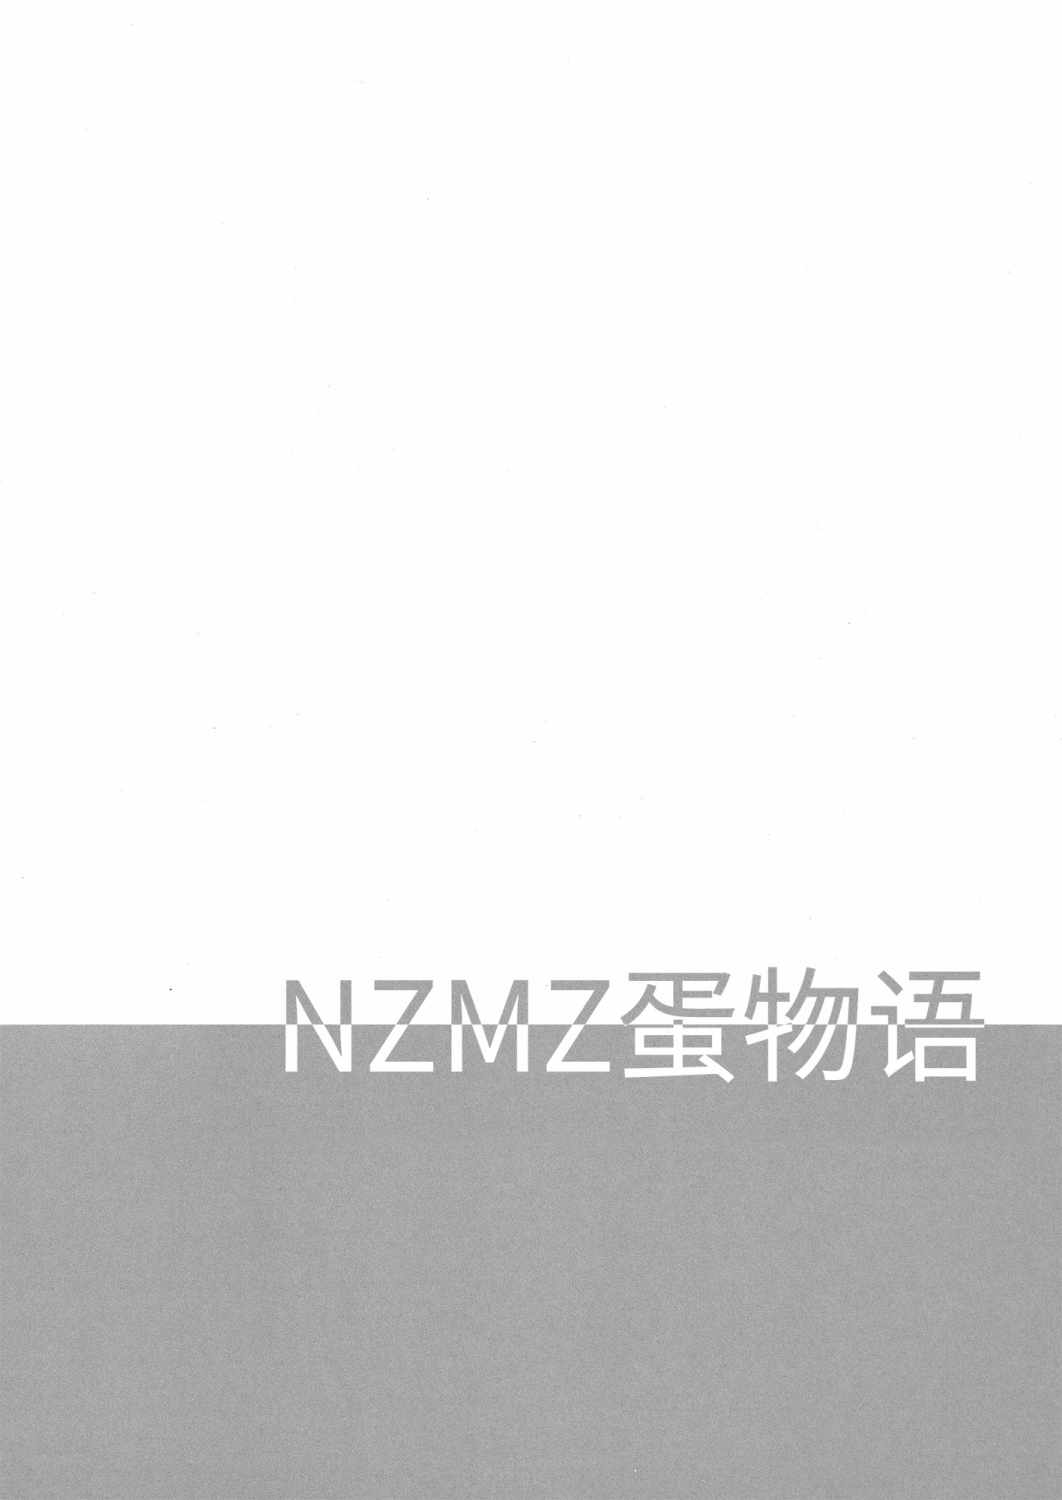 NZMZ蛋物語 - 短篇 - 3